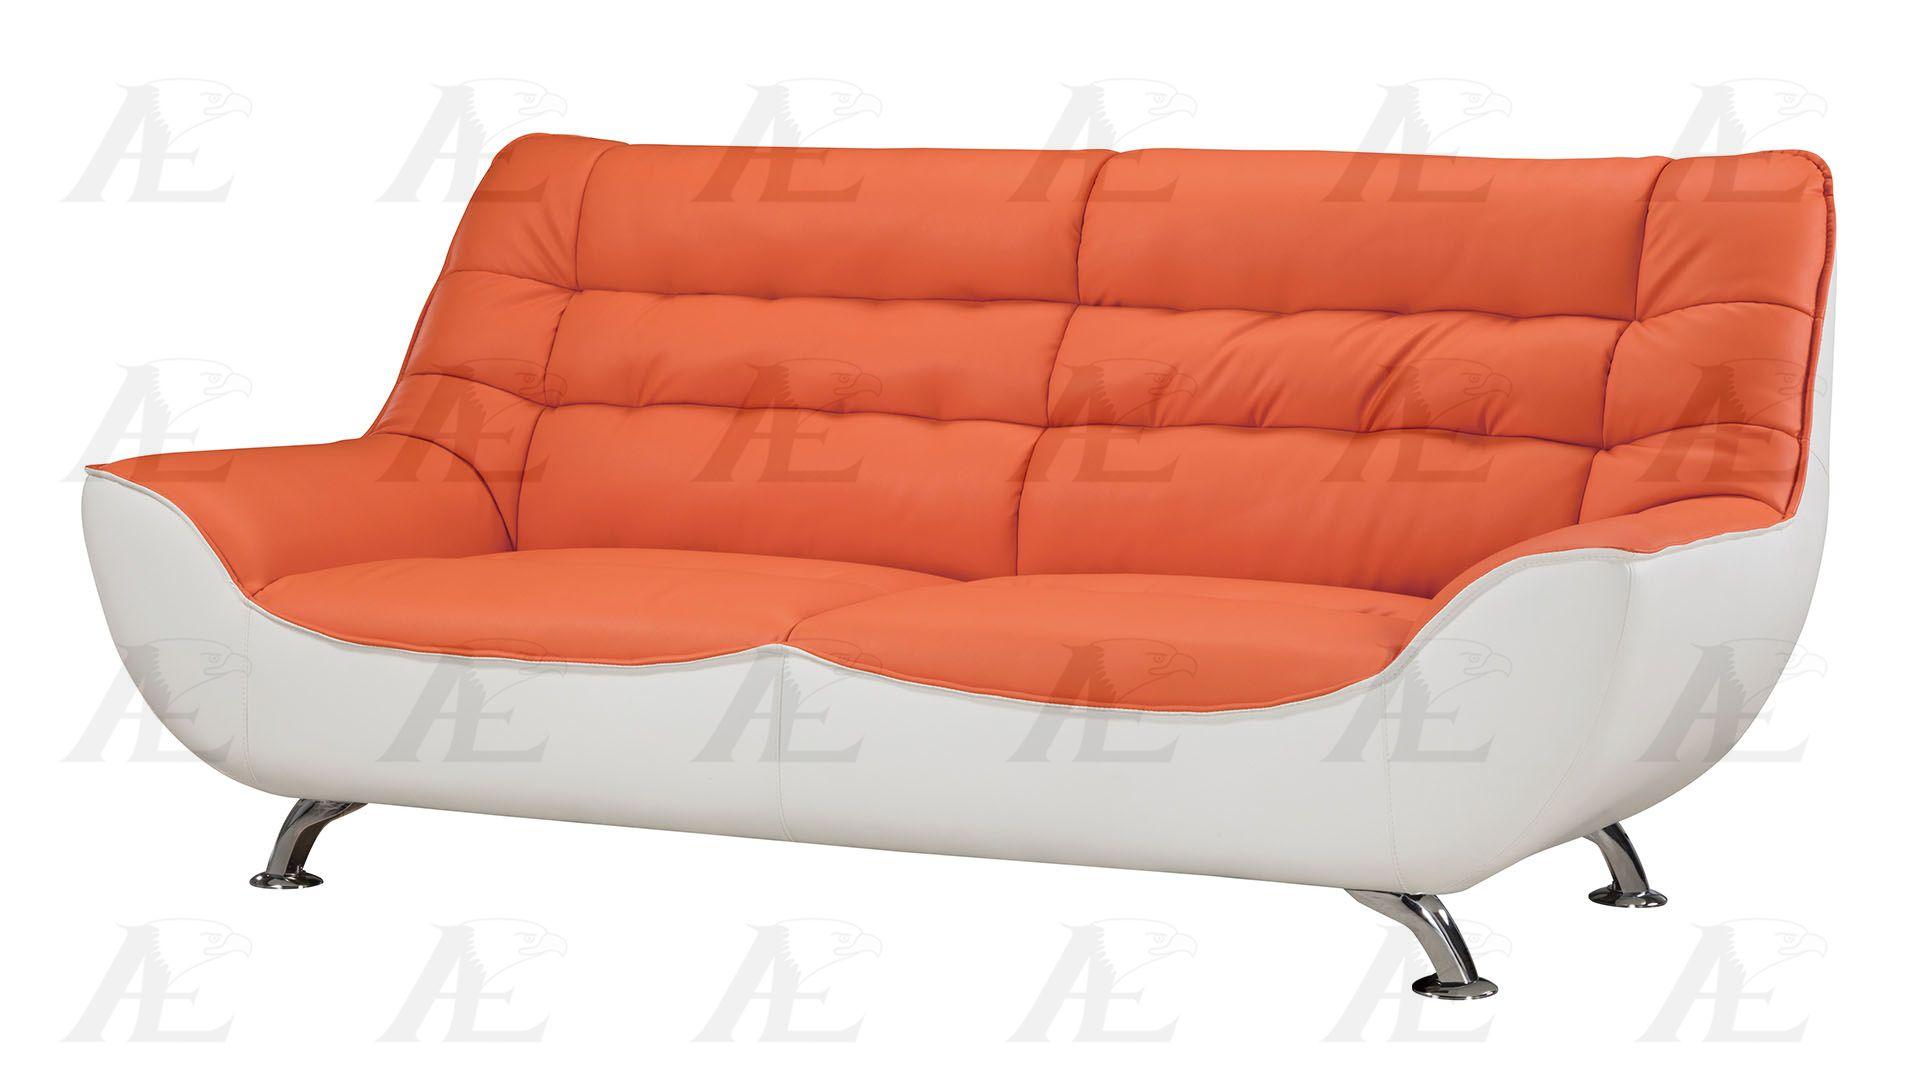 american eagle tufted white bonded leather sofa